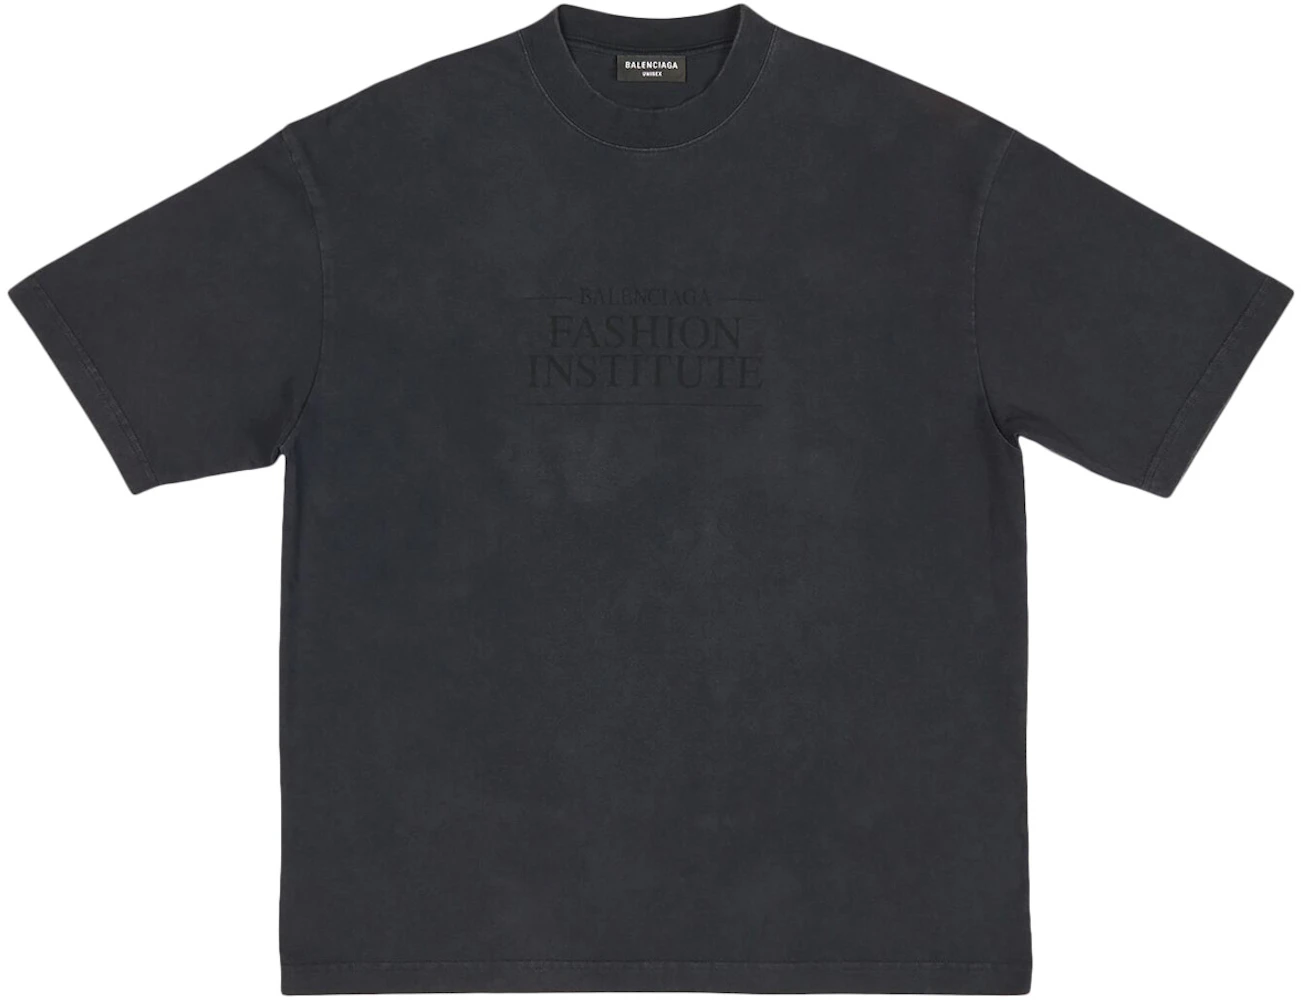 Balenciaga: Black Fashion Institute Long Sleeve T-Shirt